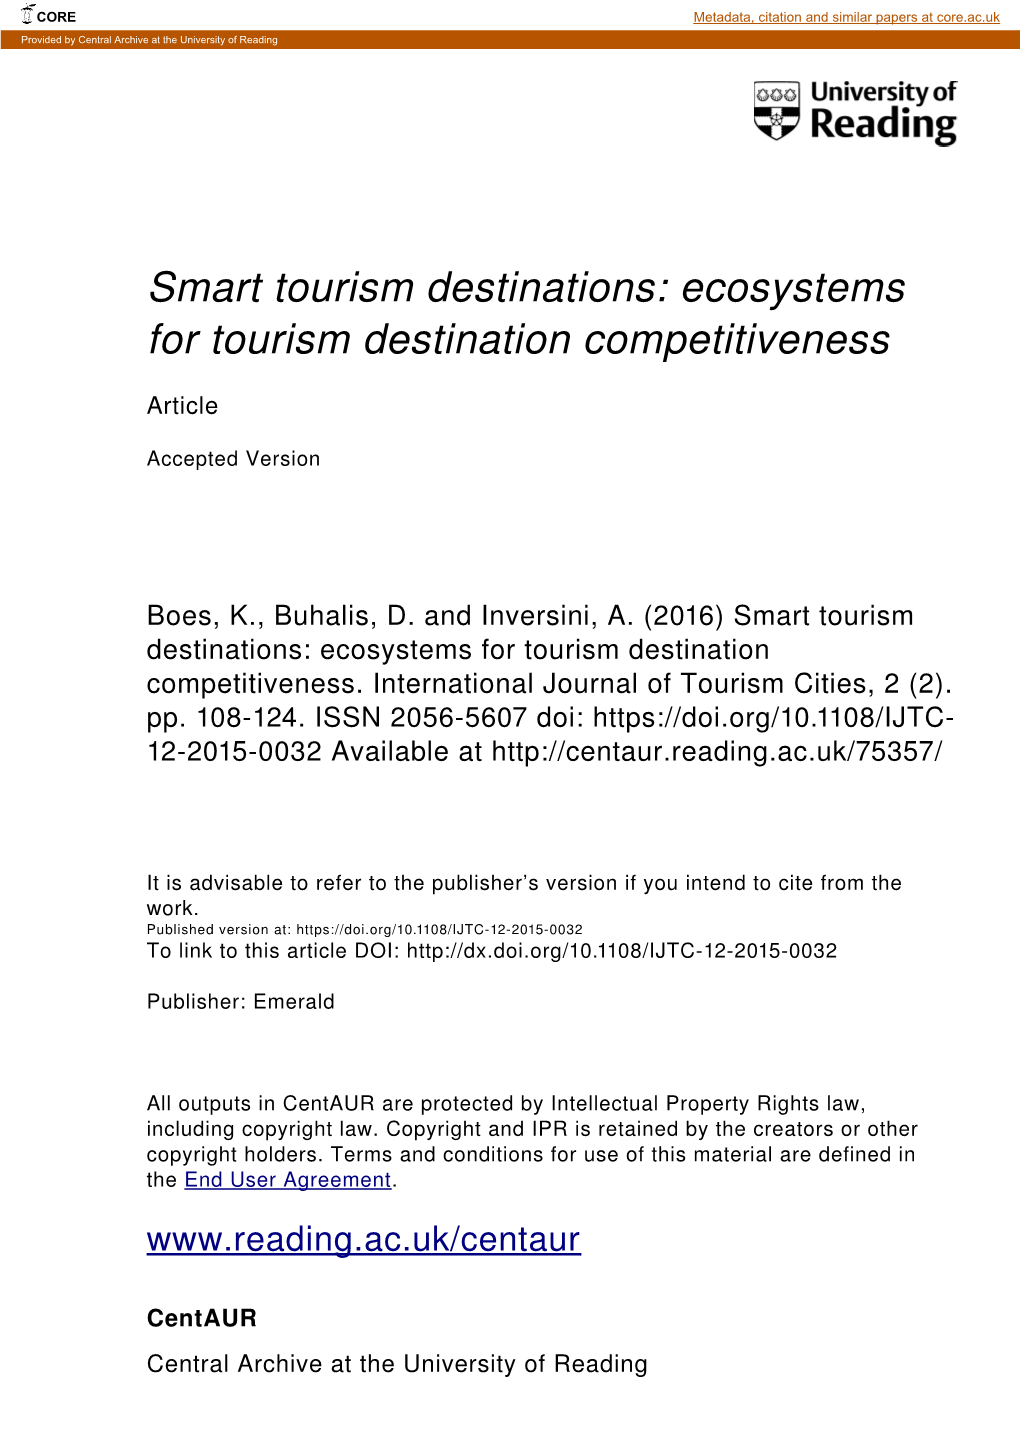 Ecosystems for Tourism Destination Competitiveness